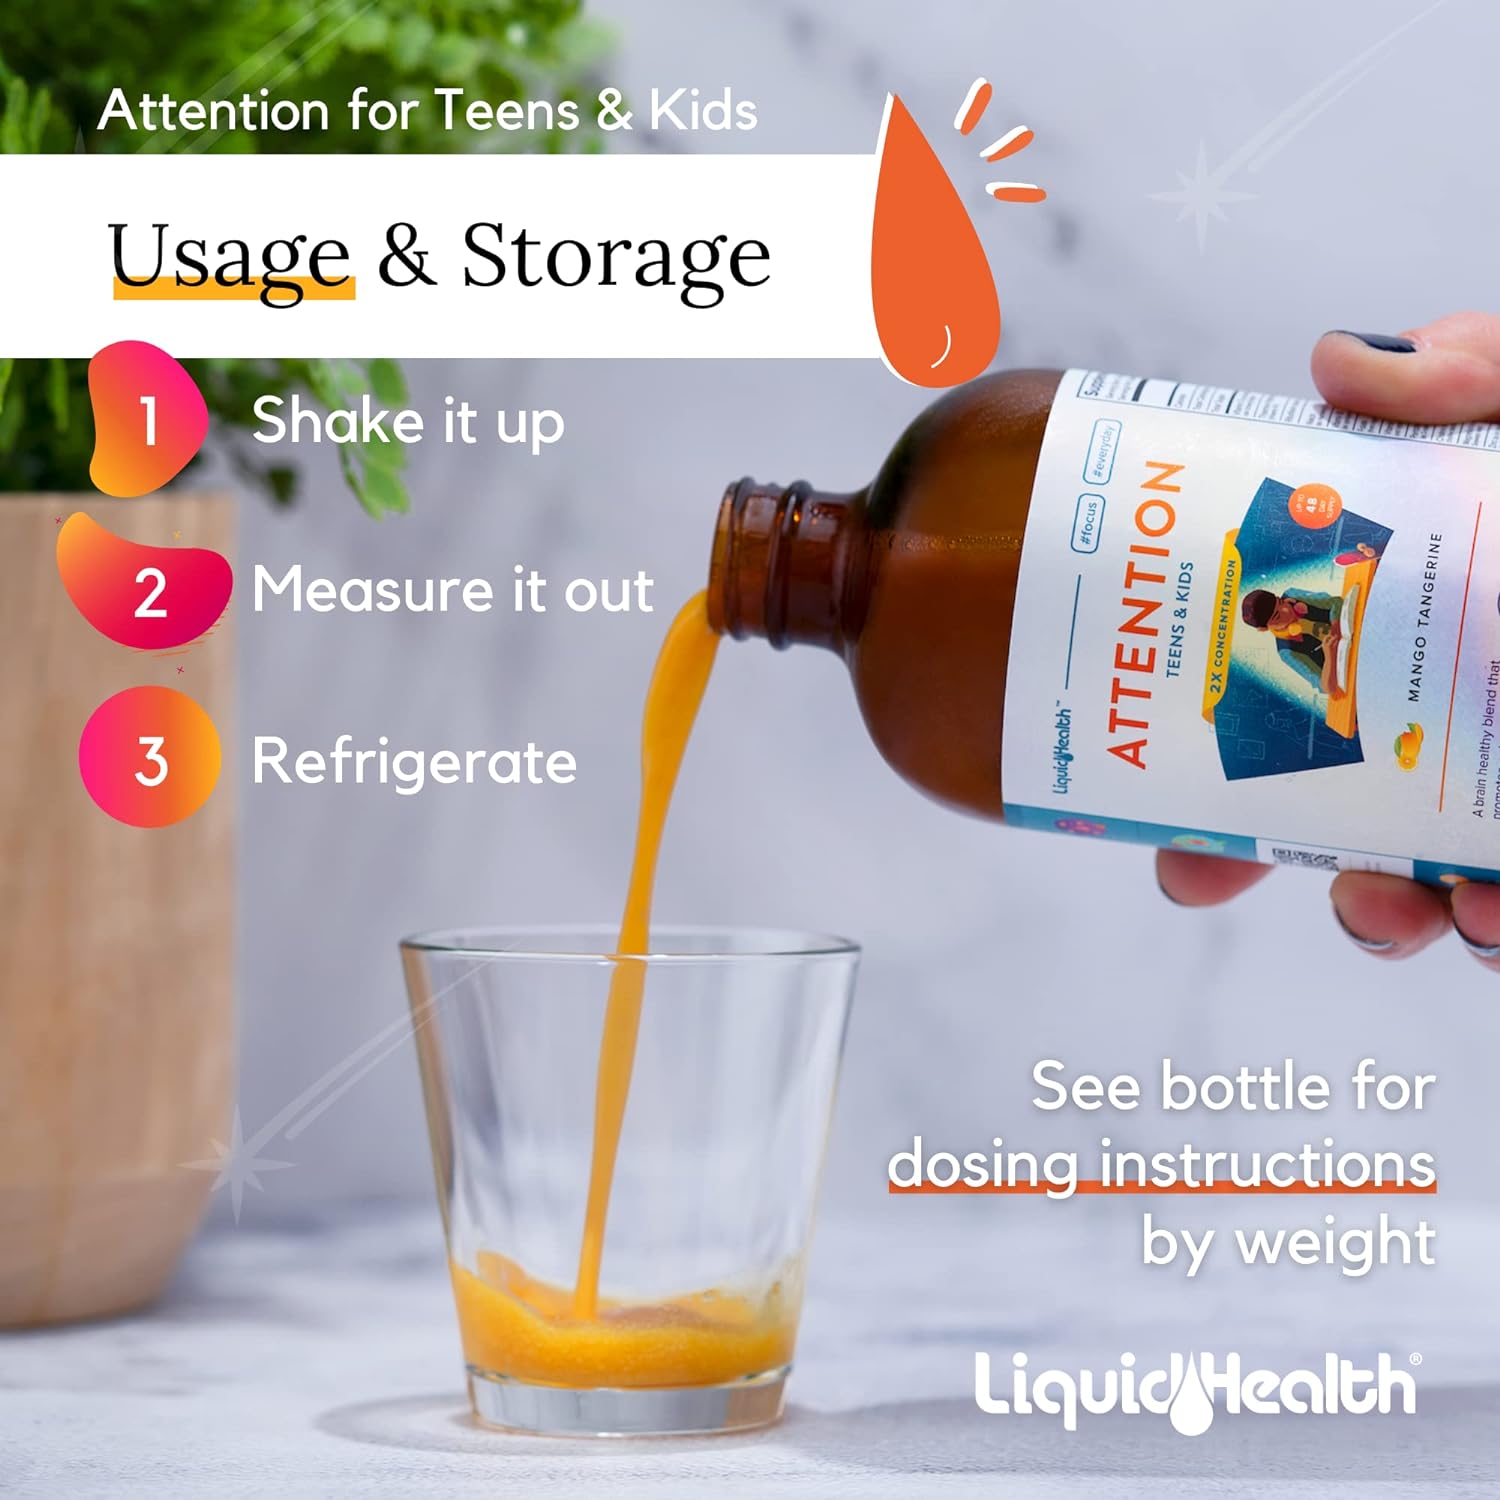 LIQUIDHEALTH B Complex Liquid Energy Boost Vitamins and Attention Formula Liquid Kids Teens Focus Concentration Memory Support